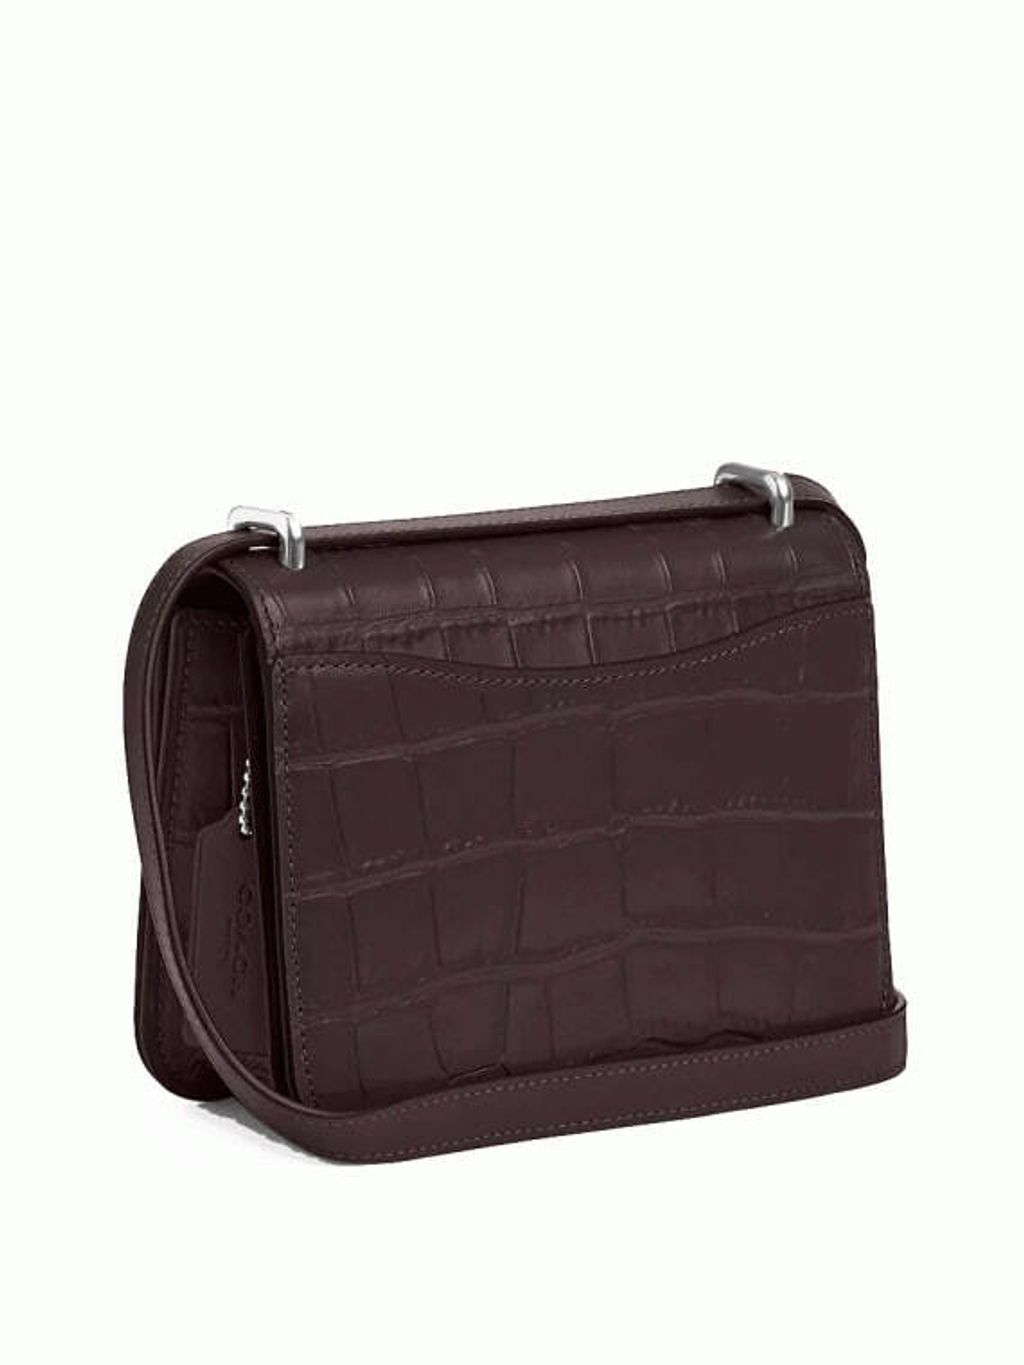 handbagbranded.com getlush outlet personalshopper usa malaysia ready stock coach malaysia  COACH Morgan Square Crossbody 2